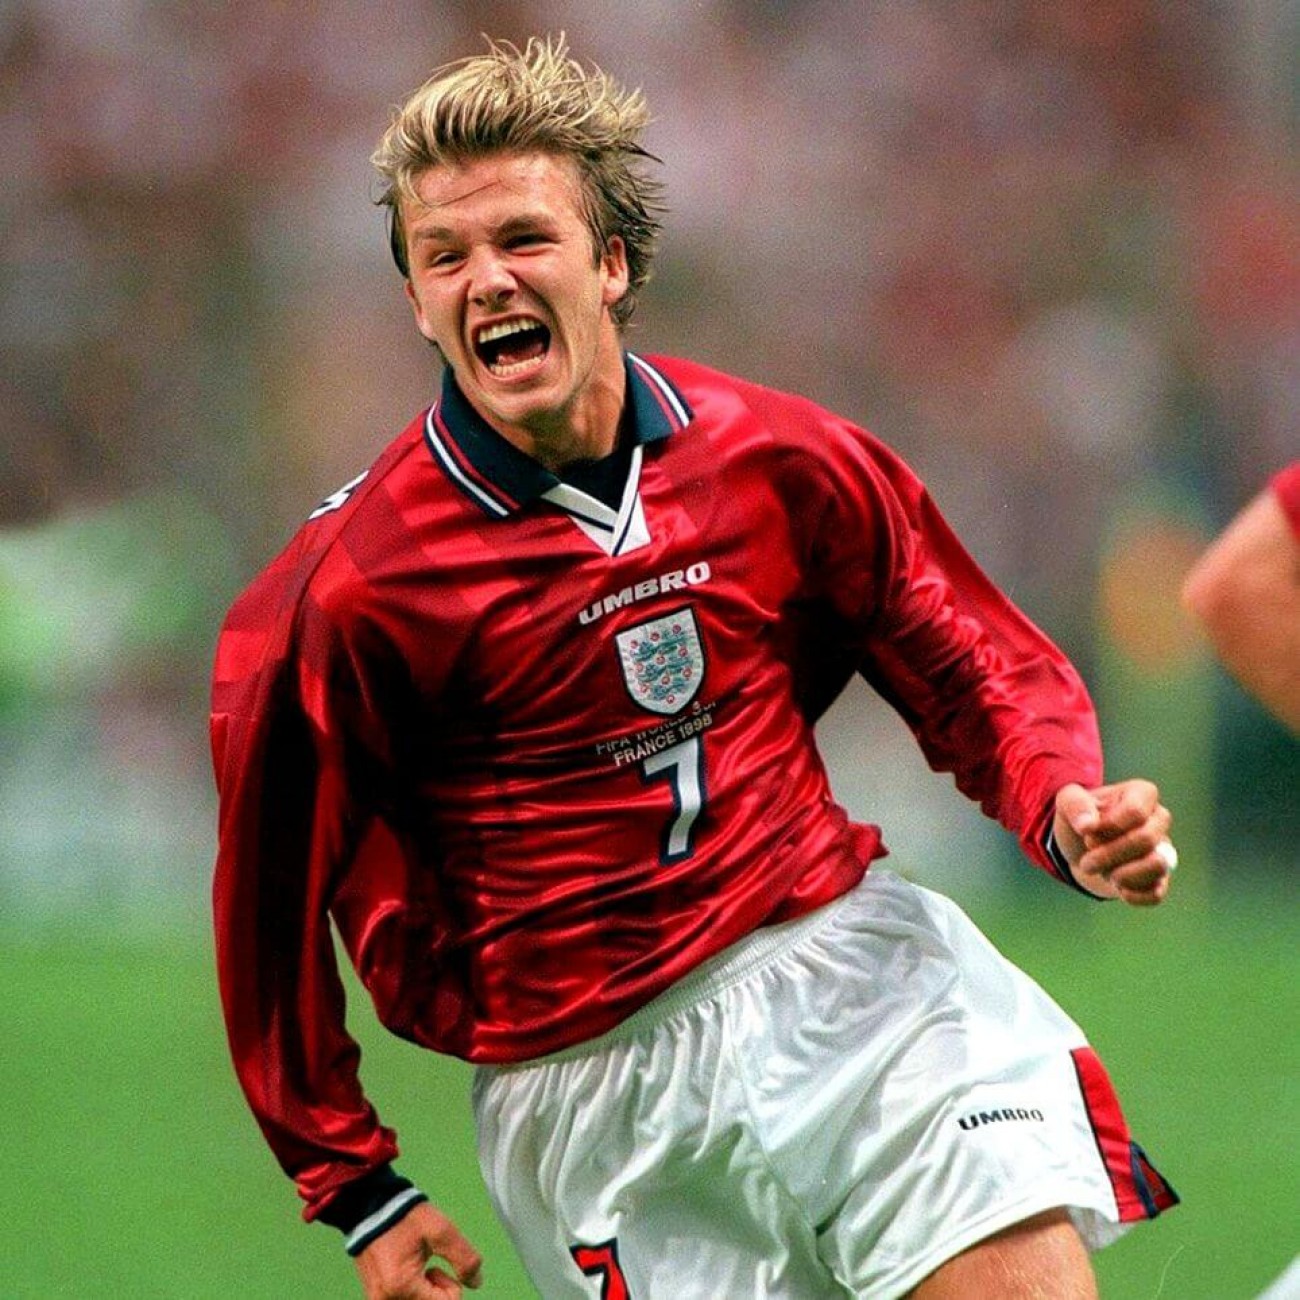 England 1998 Away football shirt